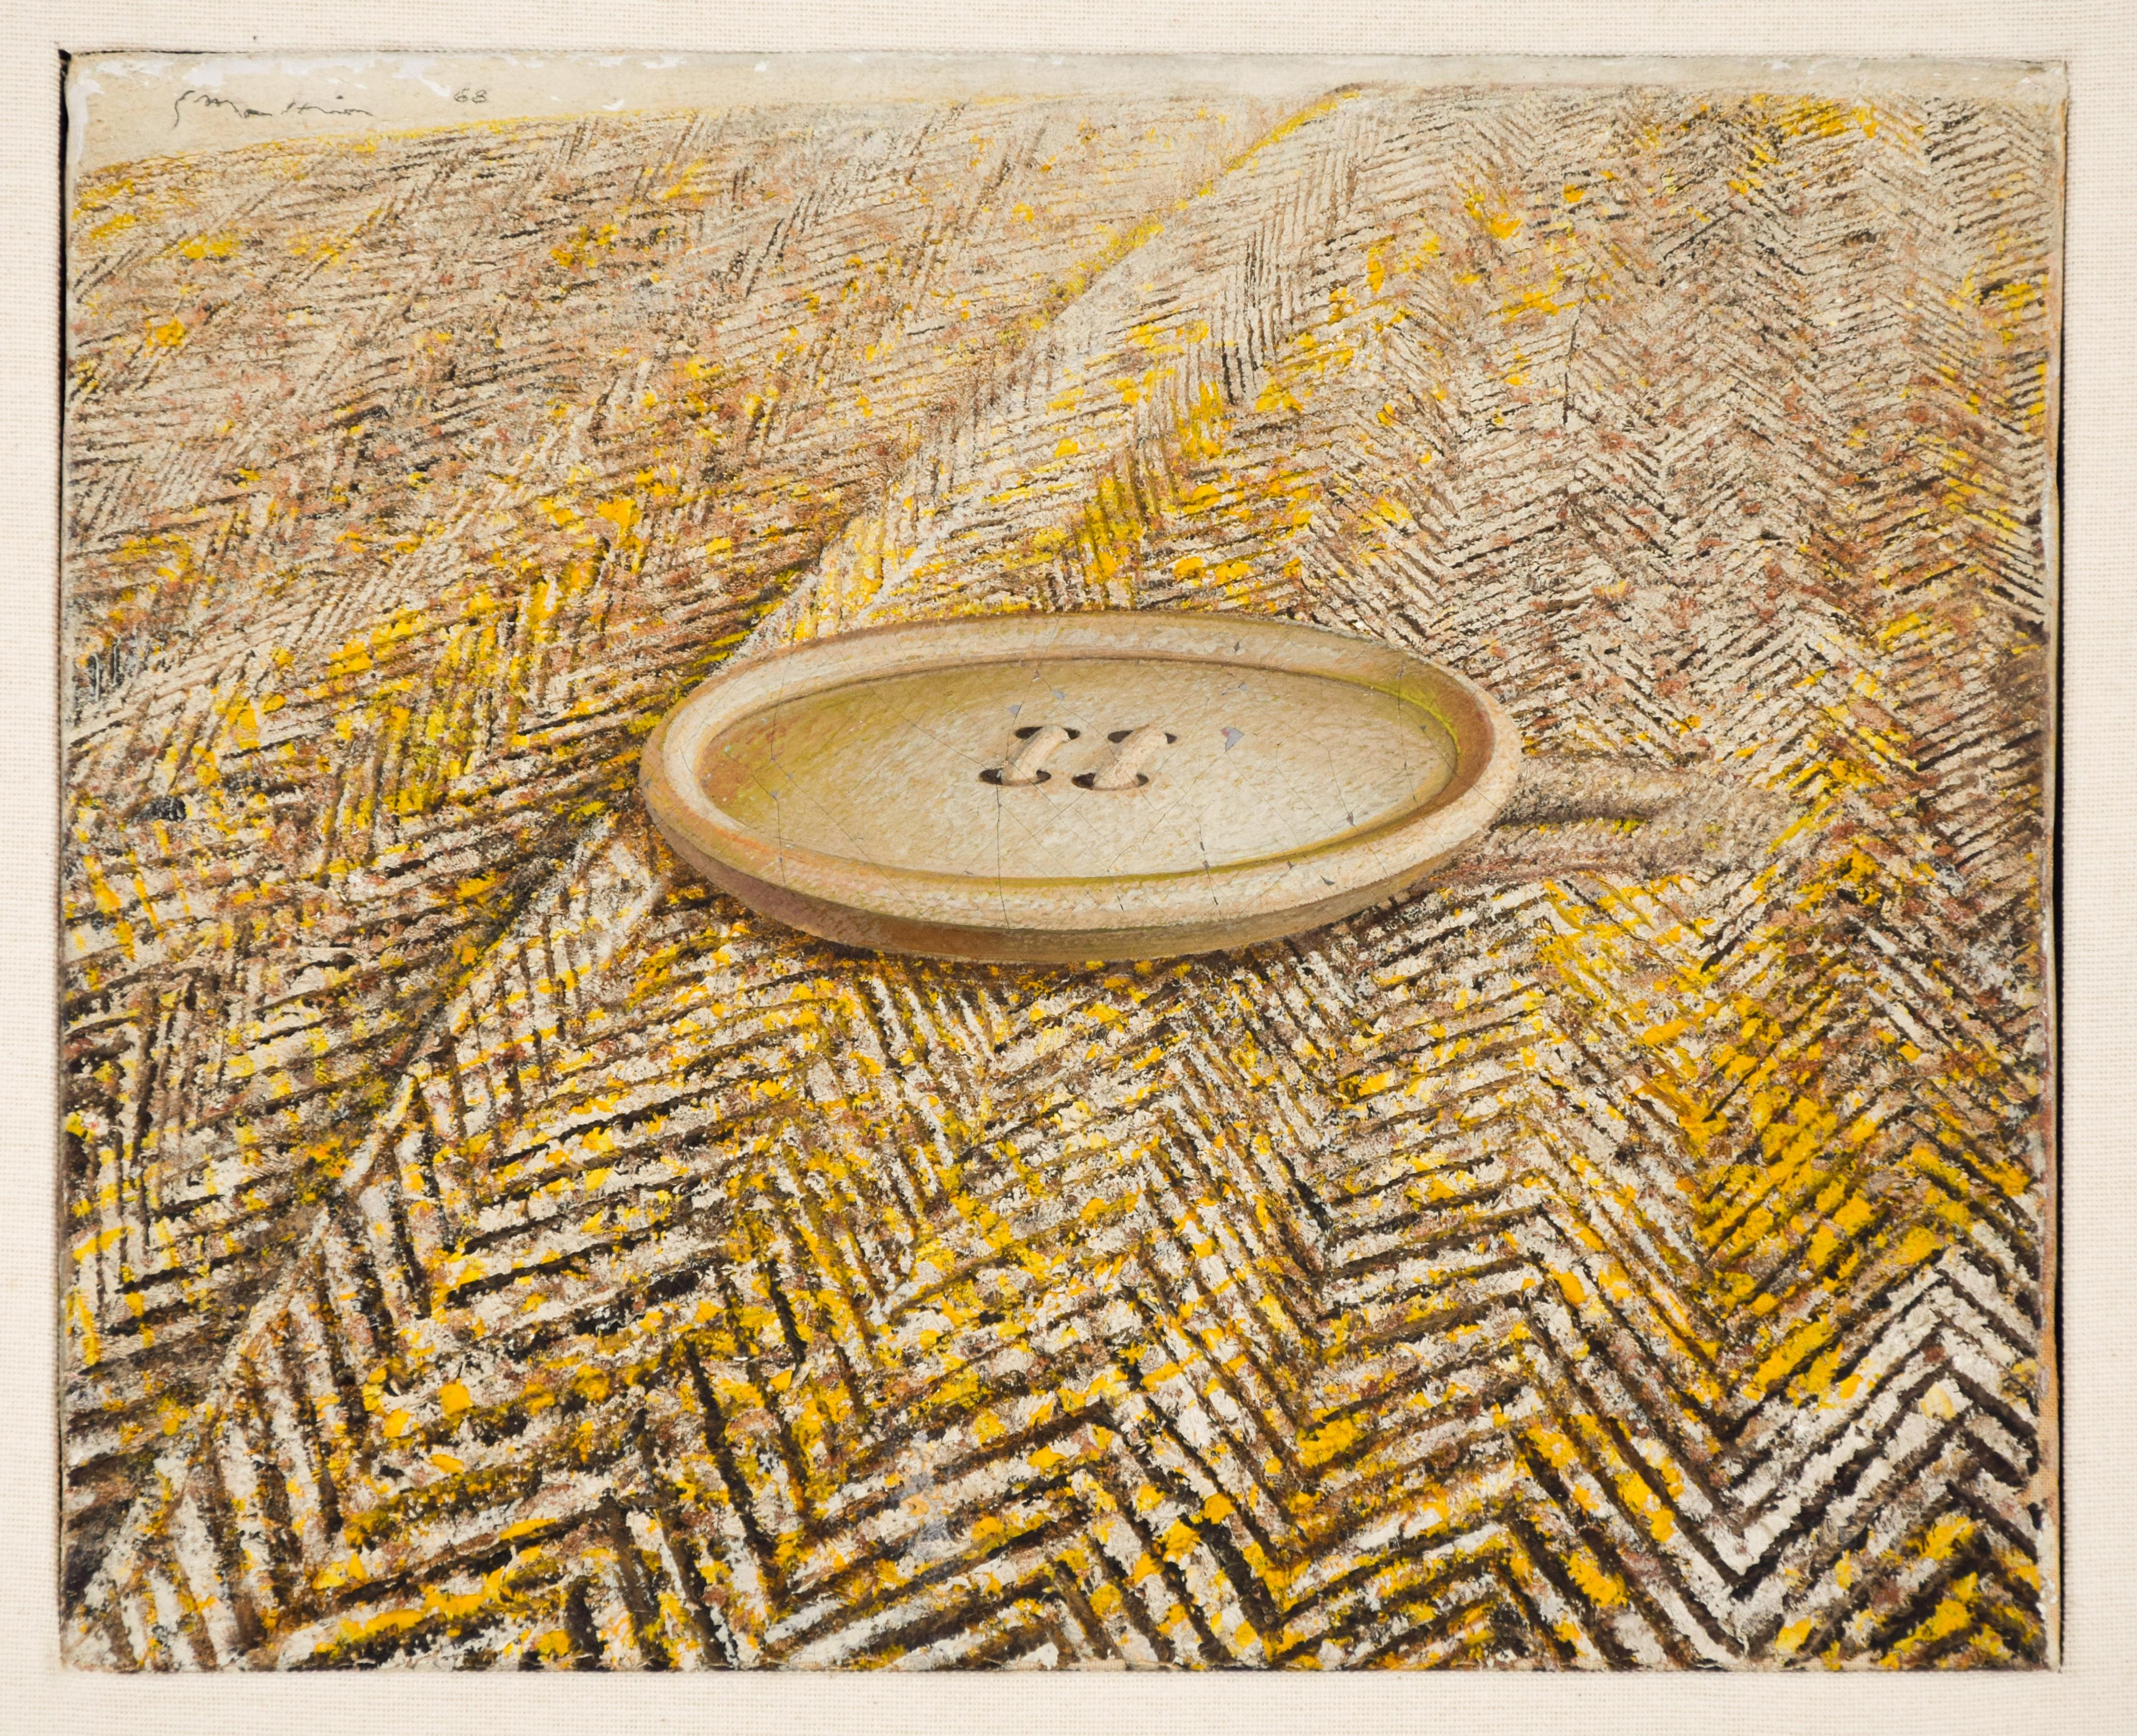 Gianluigi Mattia Figurative Painting - Button On Coat - Original Oil on Canvas by G. Mattia - 1968